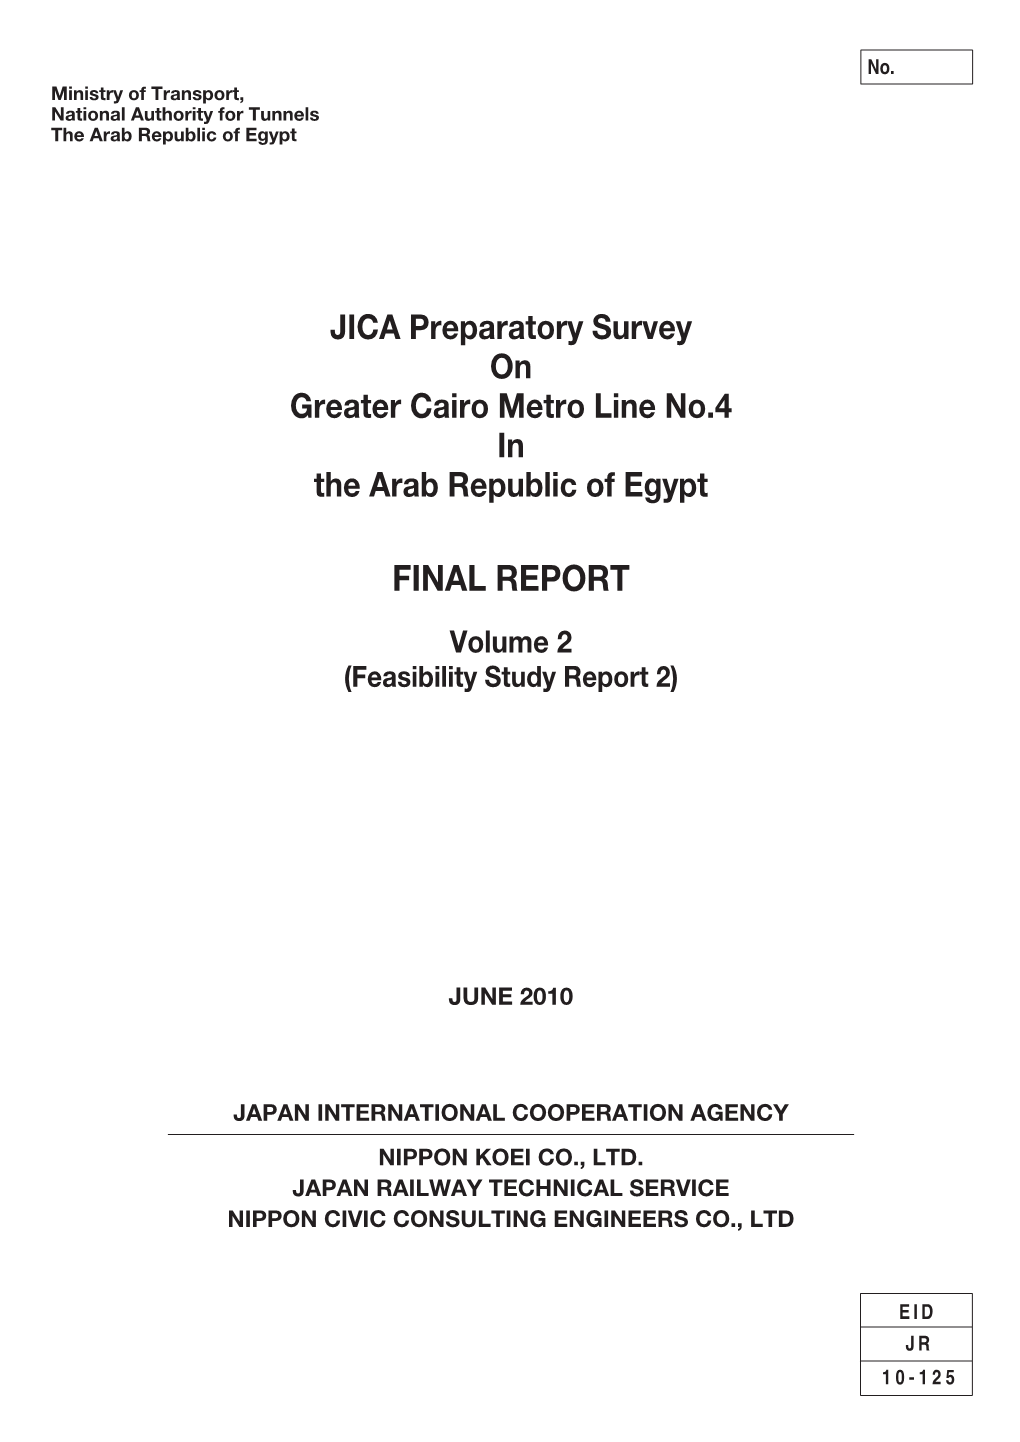 JICA Preparatory Survey on Greater Cairo Metro Line No.4 in the Arab Republic of Egypt